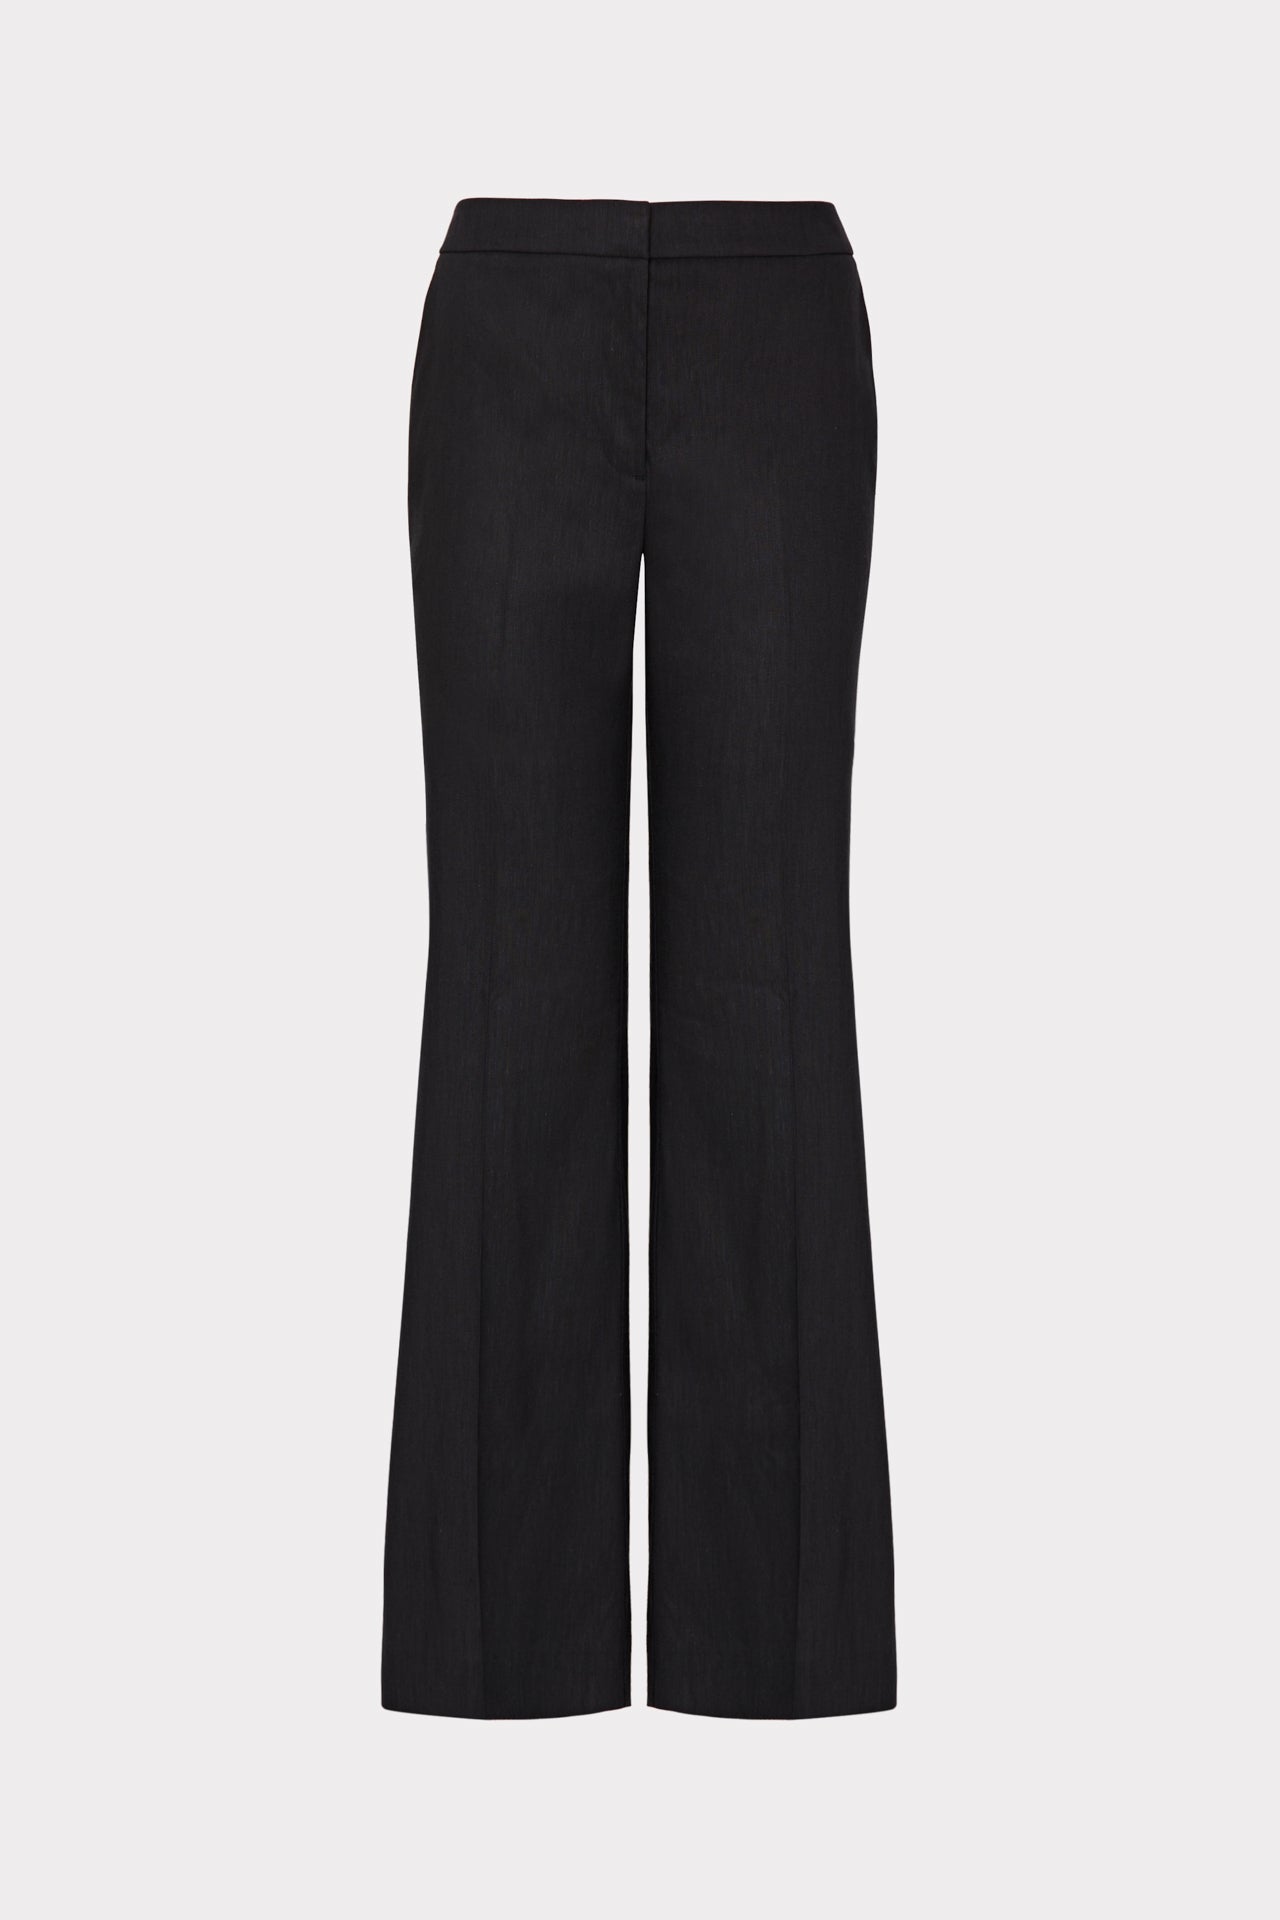 Lennon Linen Pants in Black | MILLY